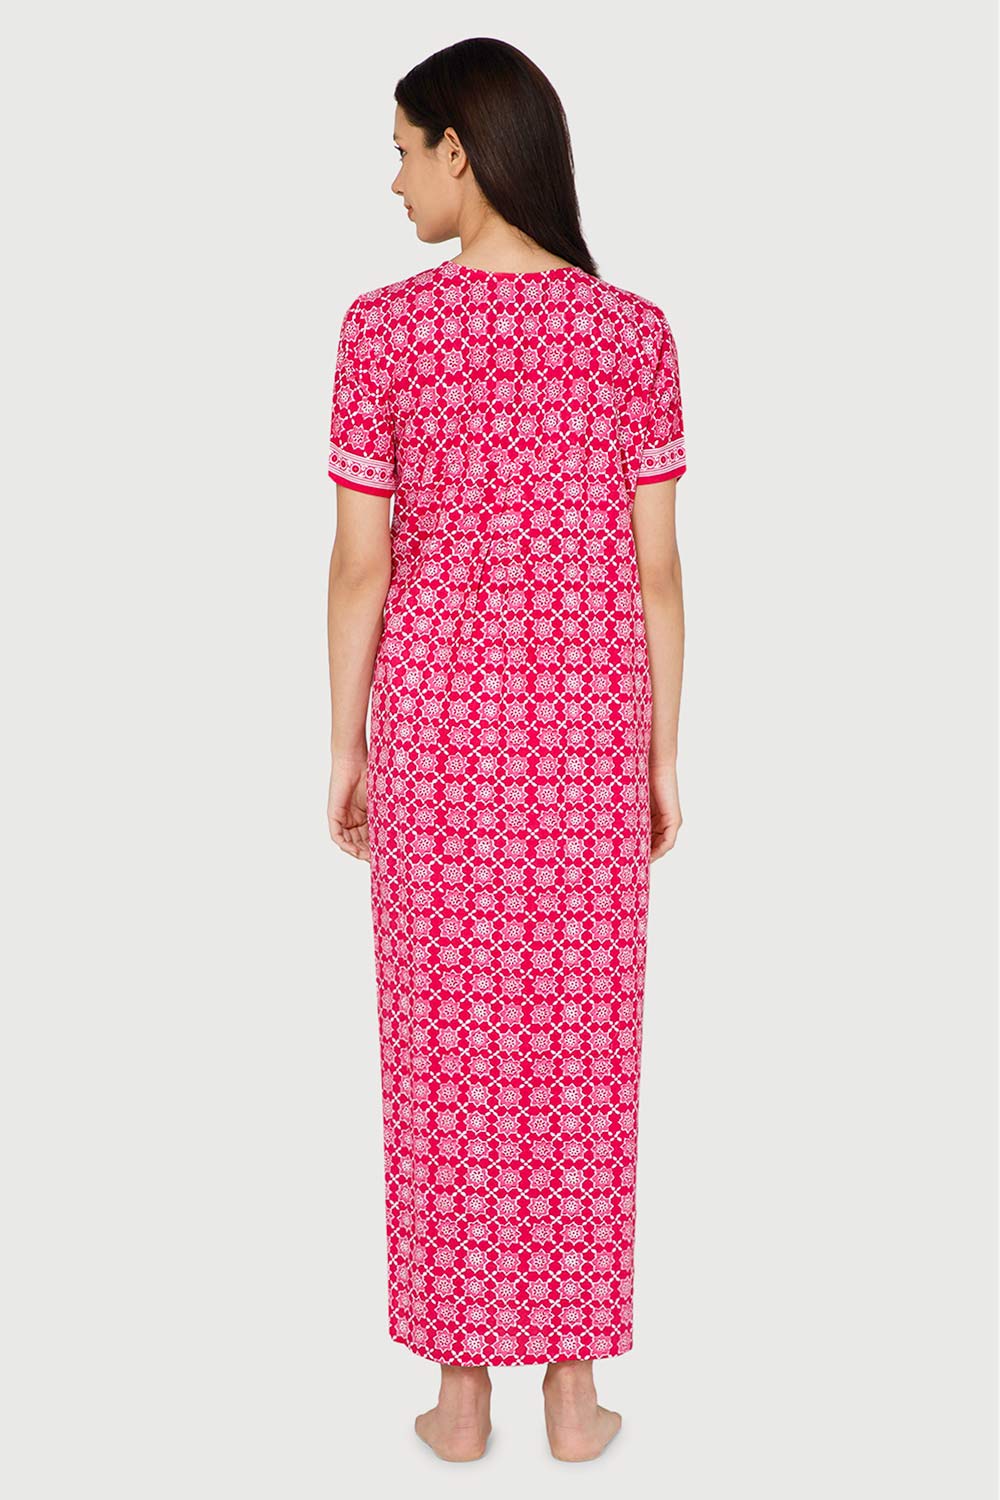 Naidu Hall A-line Women's Nighty Full Length Half Sleeve  - Pink - R136